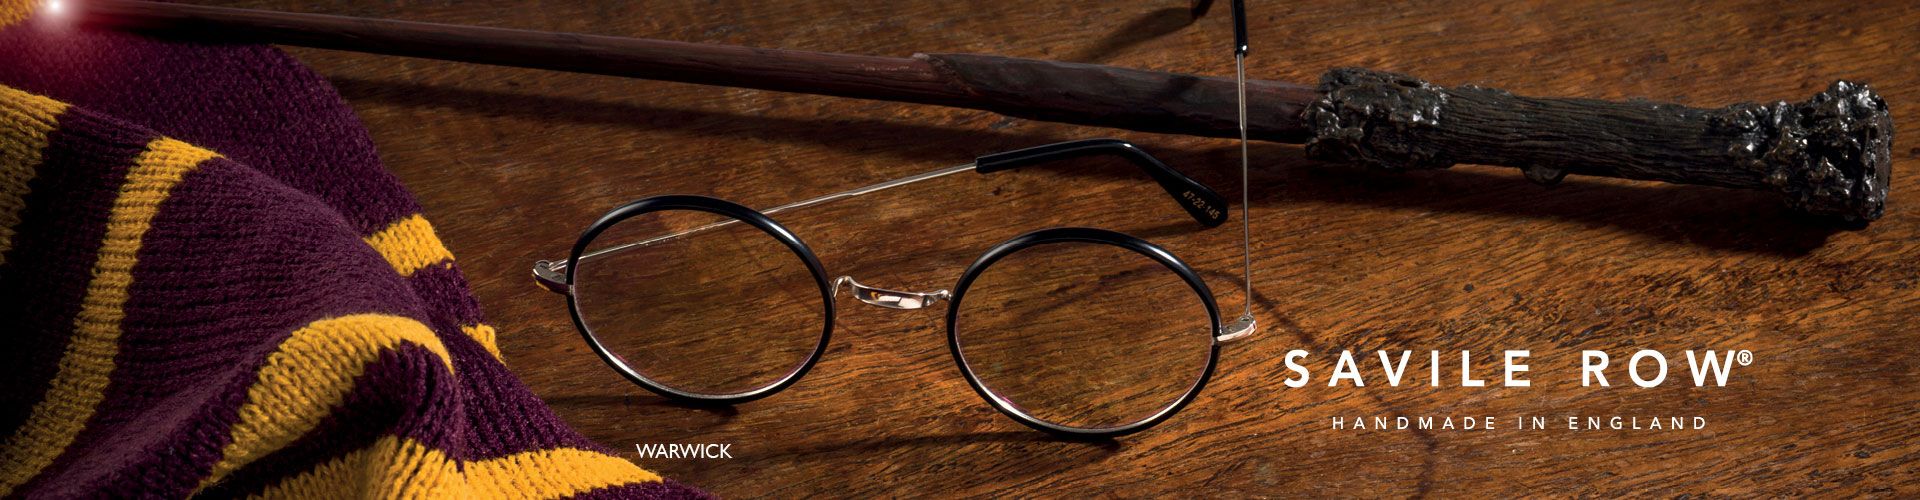 Shop Savile Row Eyeglasses - model 18Kt Warwick featured